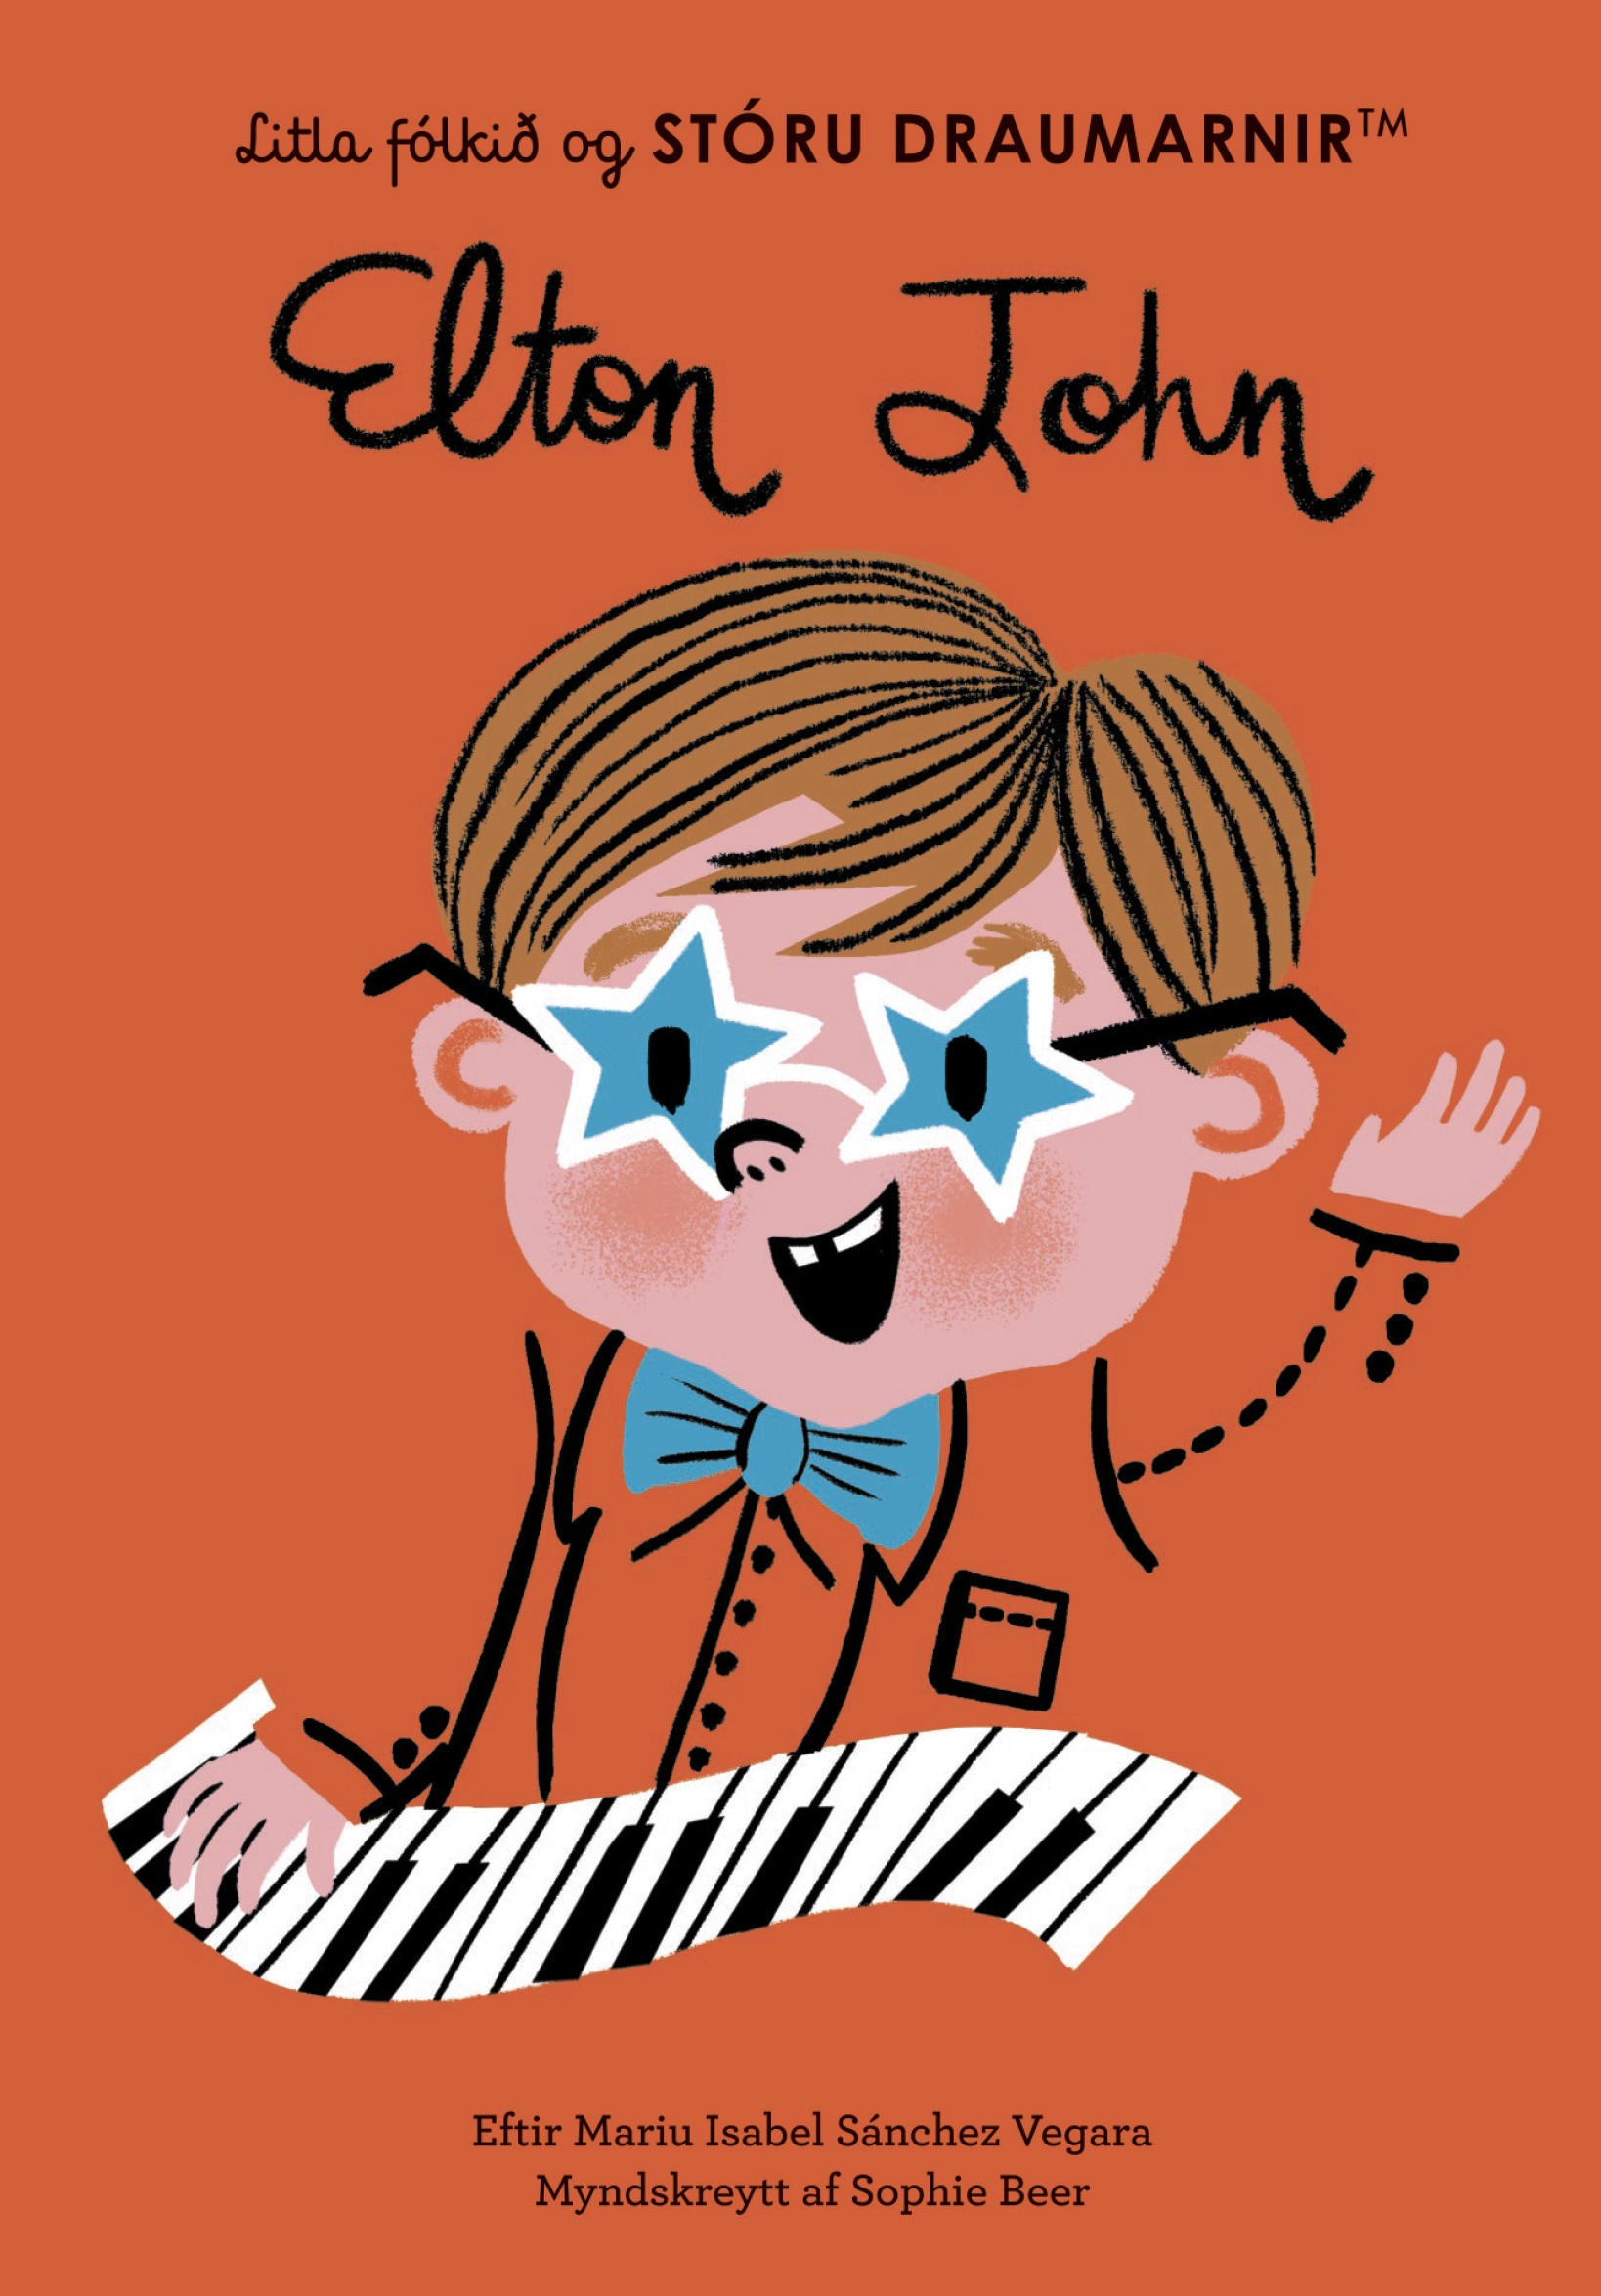 05 - Elton John